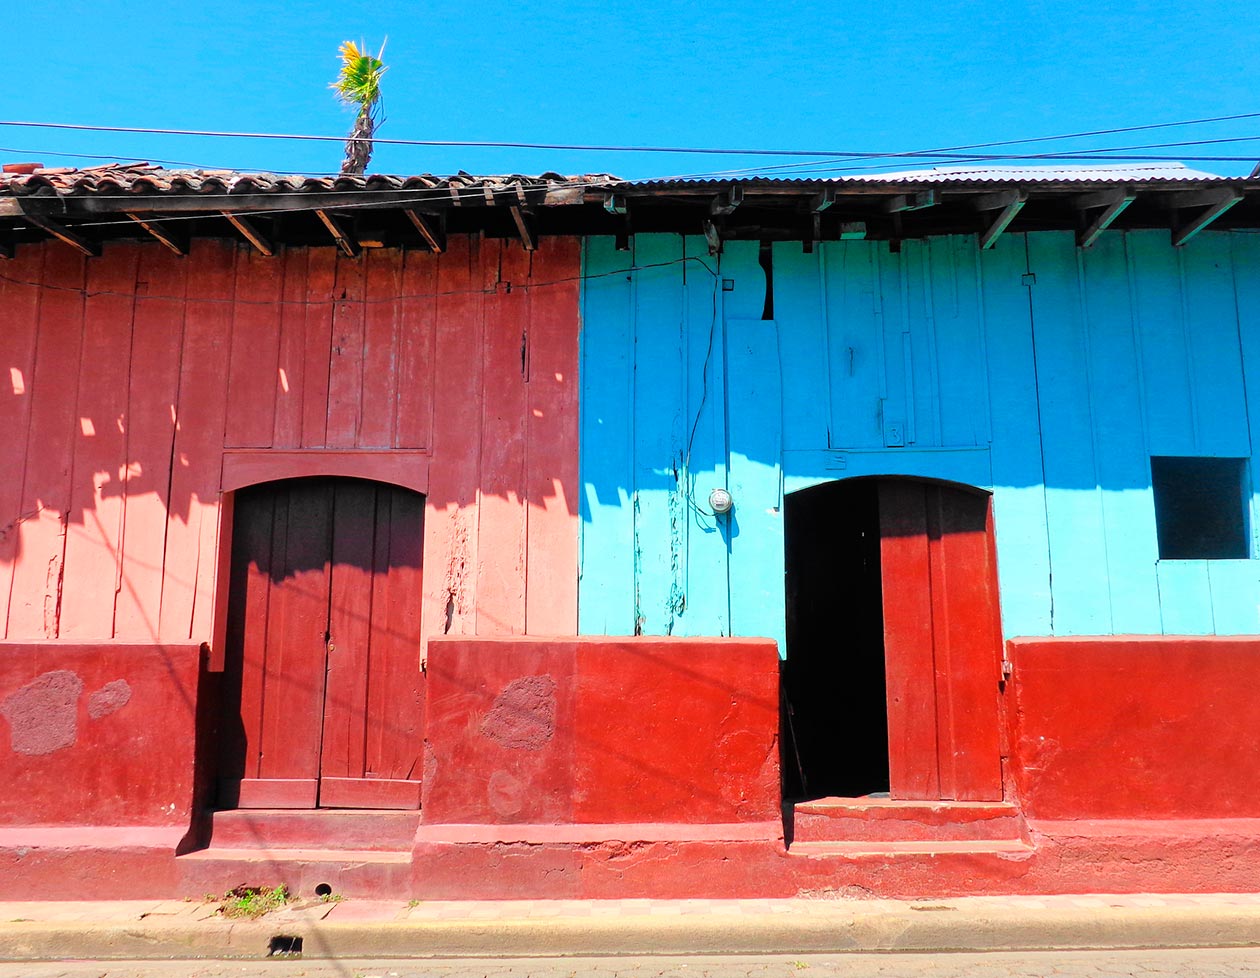 Masaya, Nicaragua | Goggins World | Flickr.com | Creative Commons